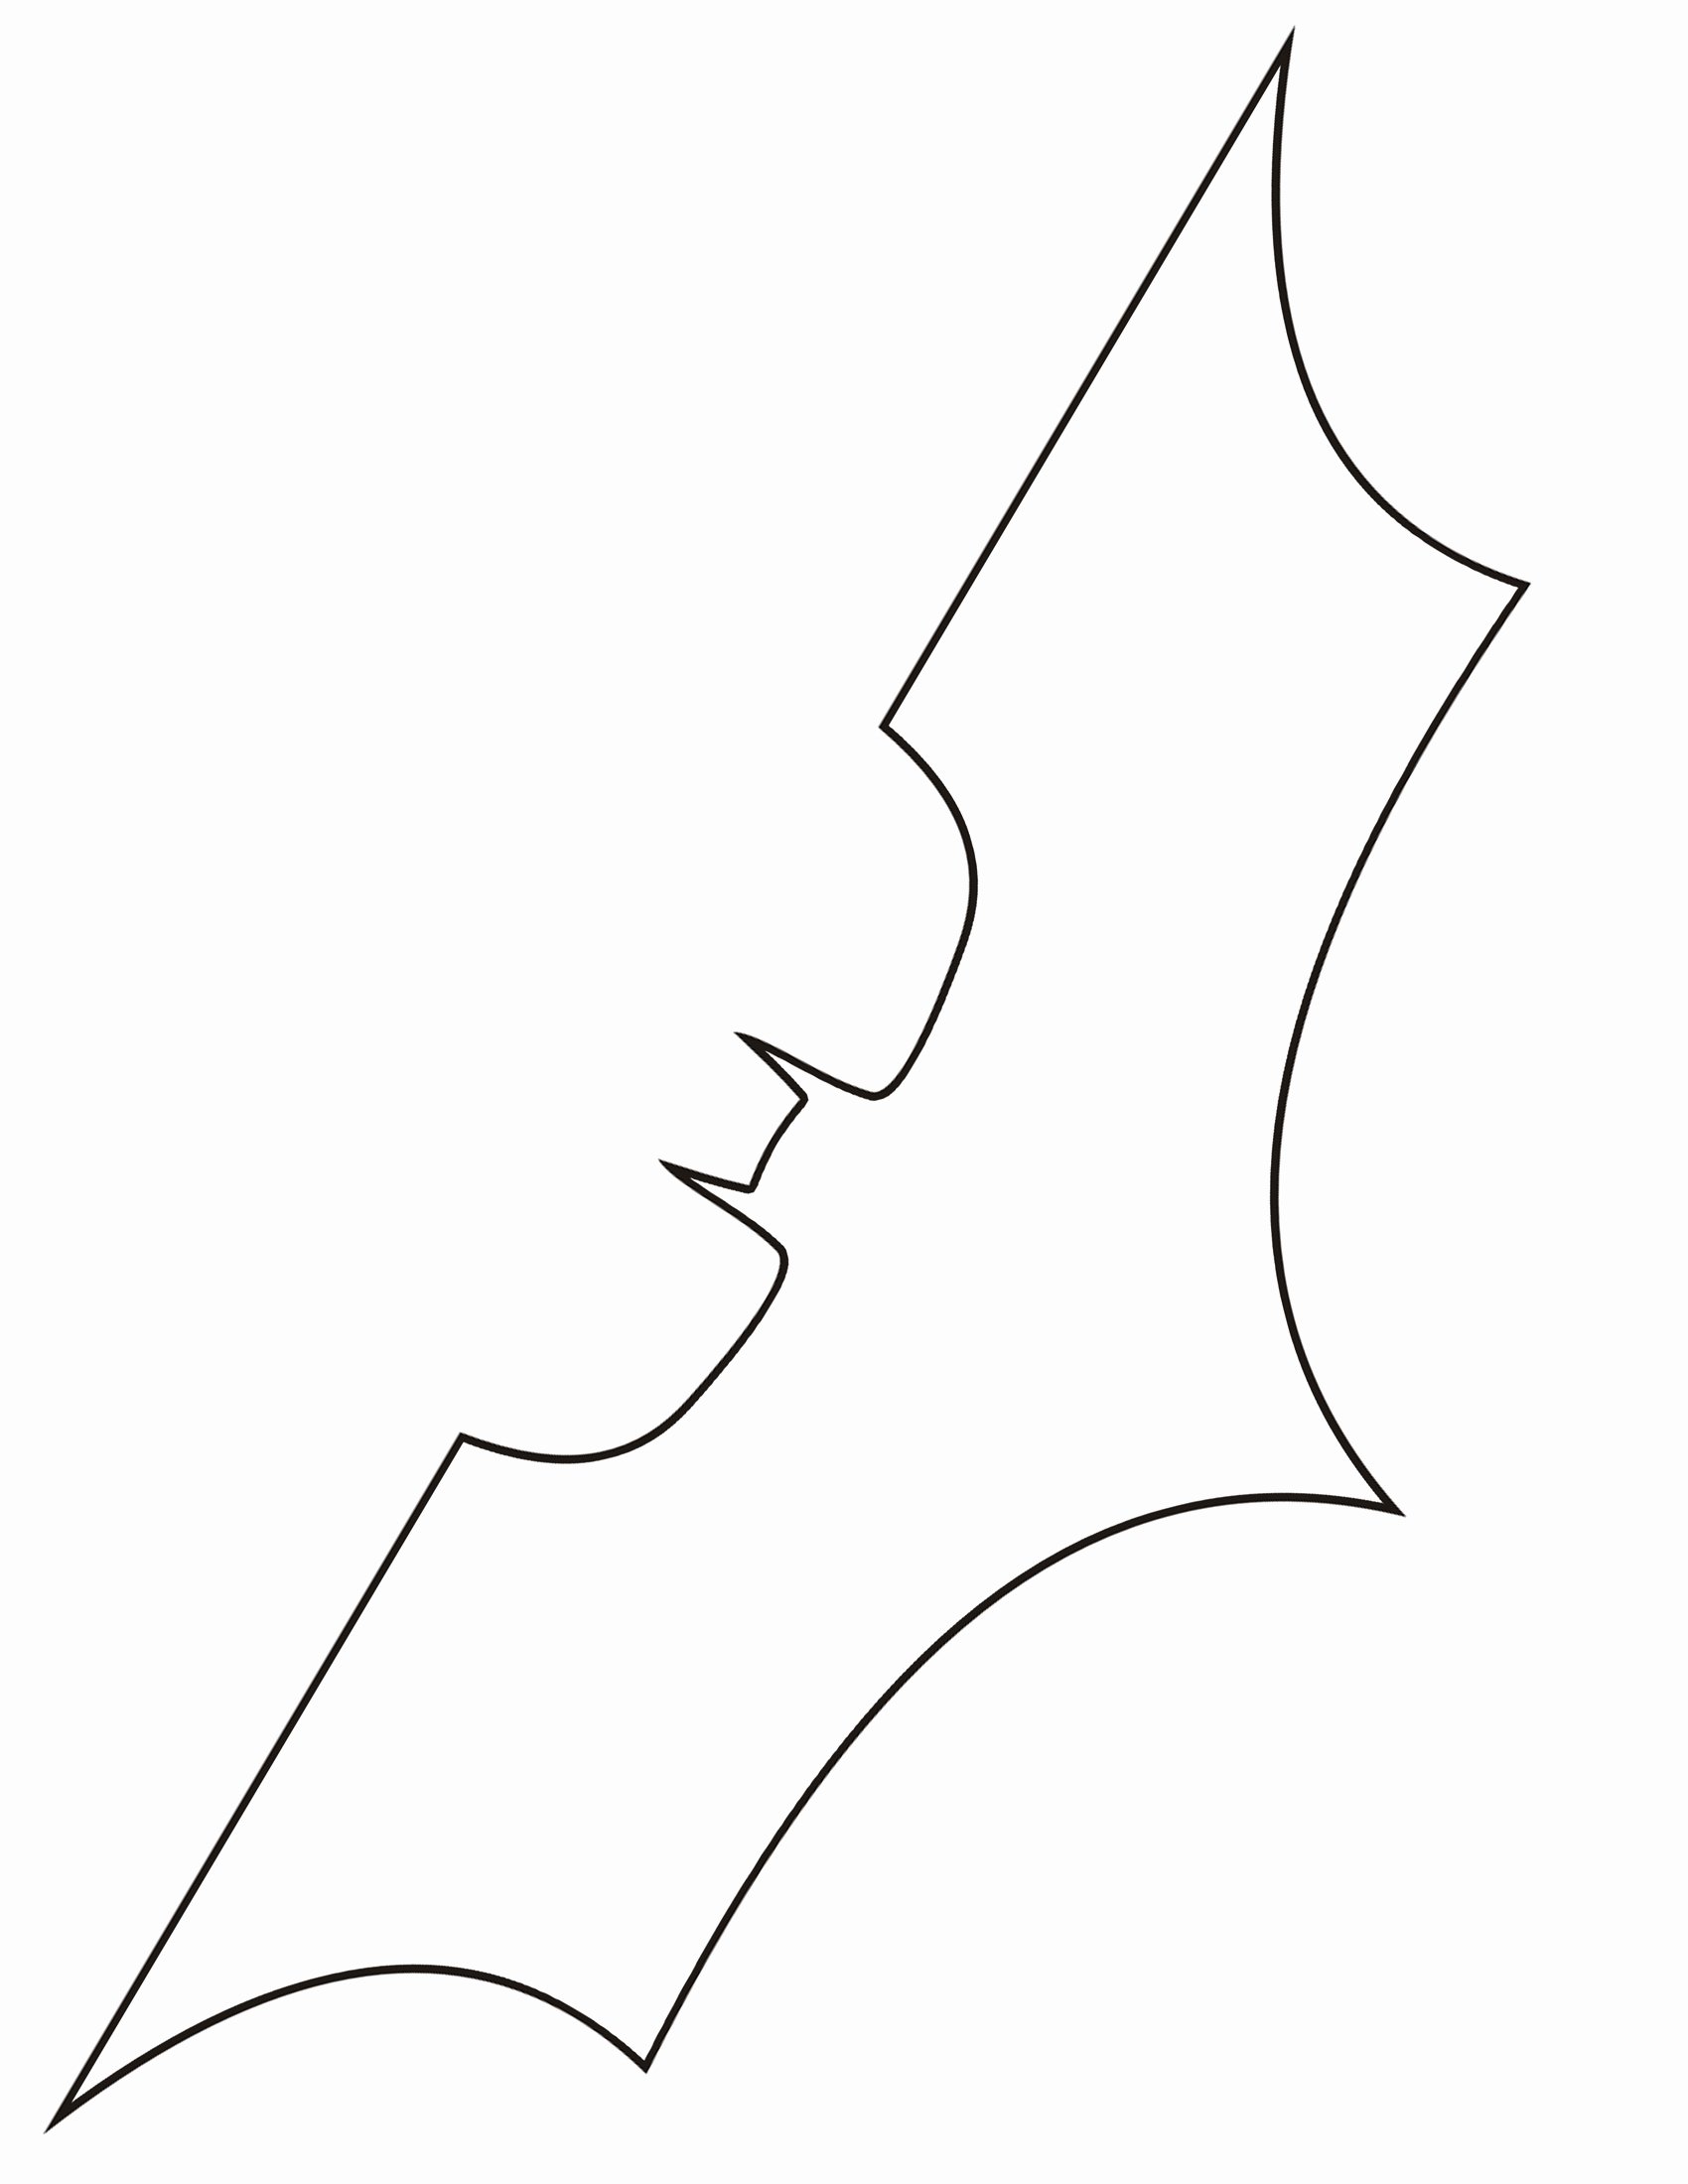 Batman Signal Template Elegant Free Batman Outline Download Free Clip Art Free Clip Art